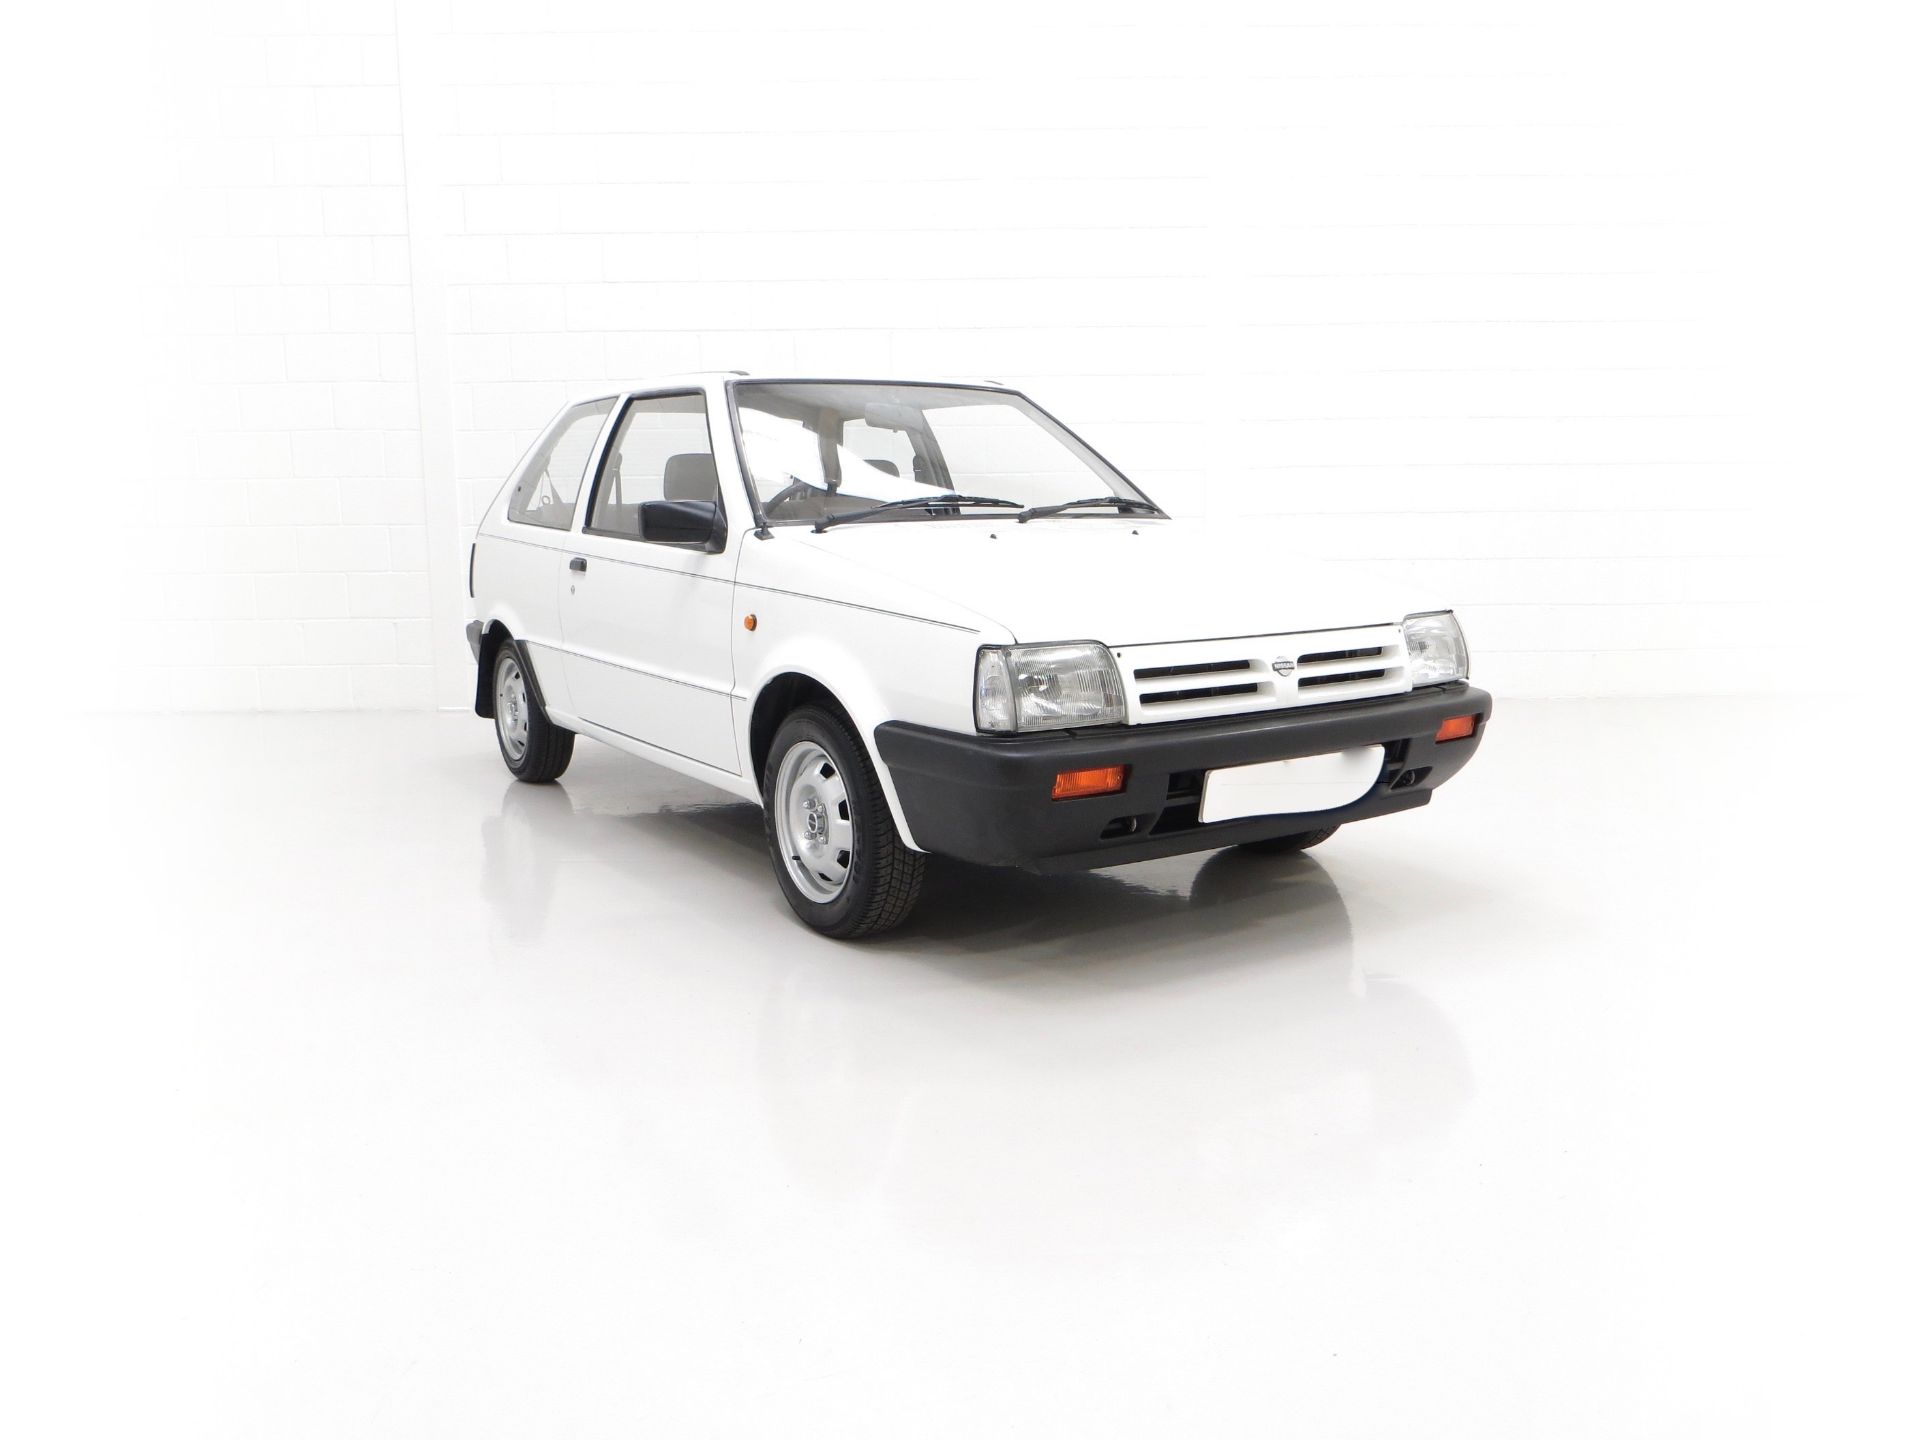 1991, Nissan Micra 1.0 Premium - Image 2 of 118